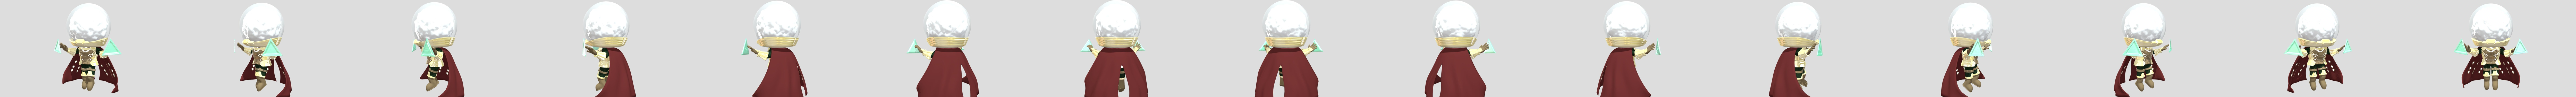 Mysterio far from home roblox avatar